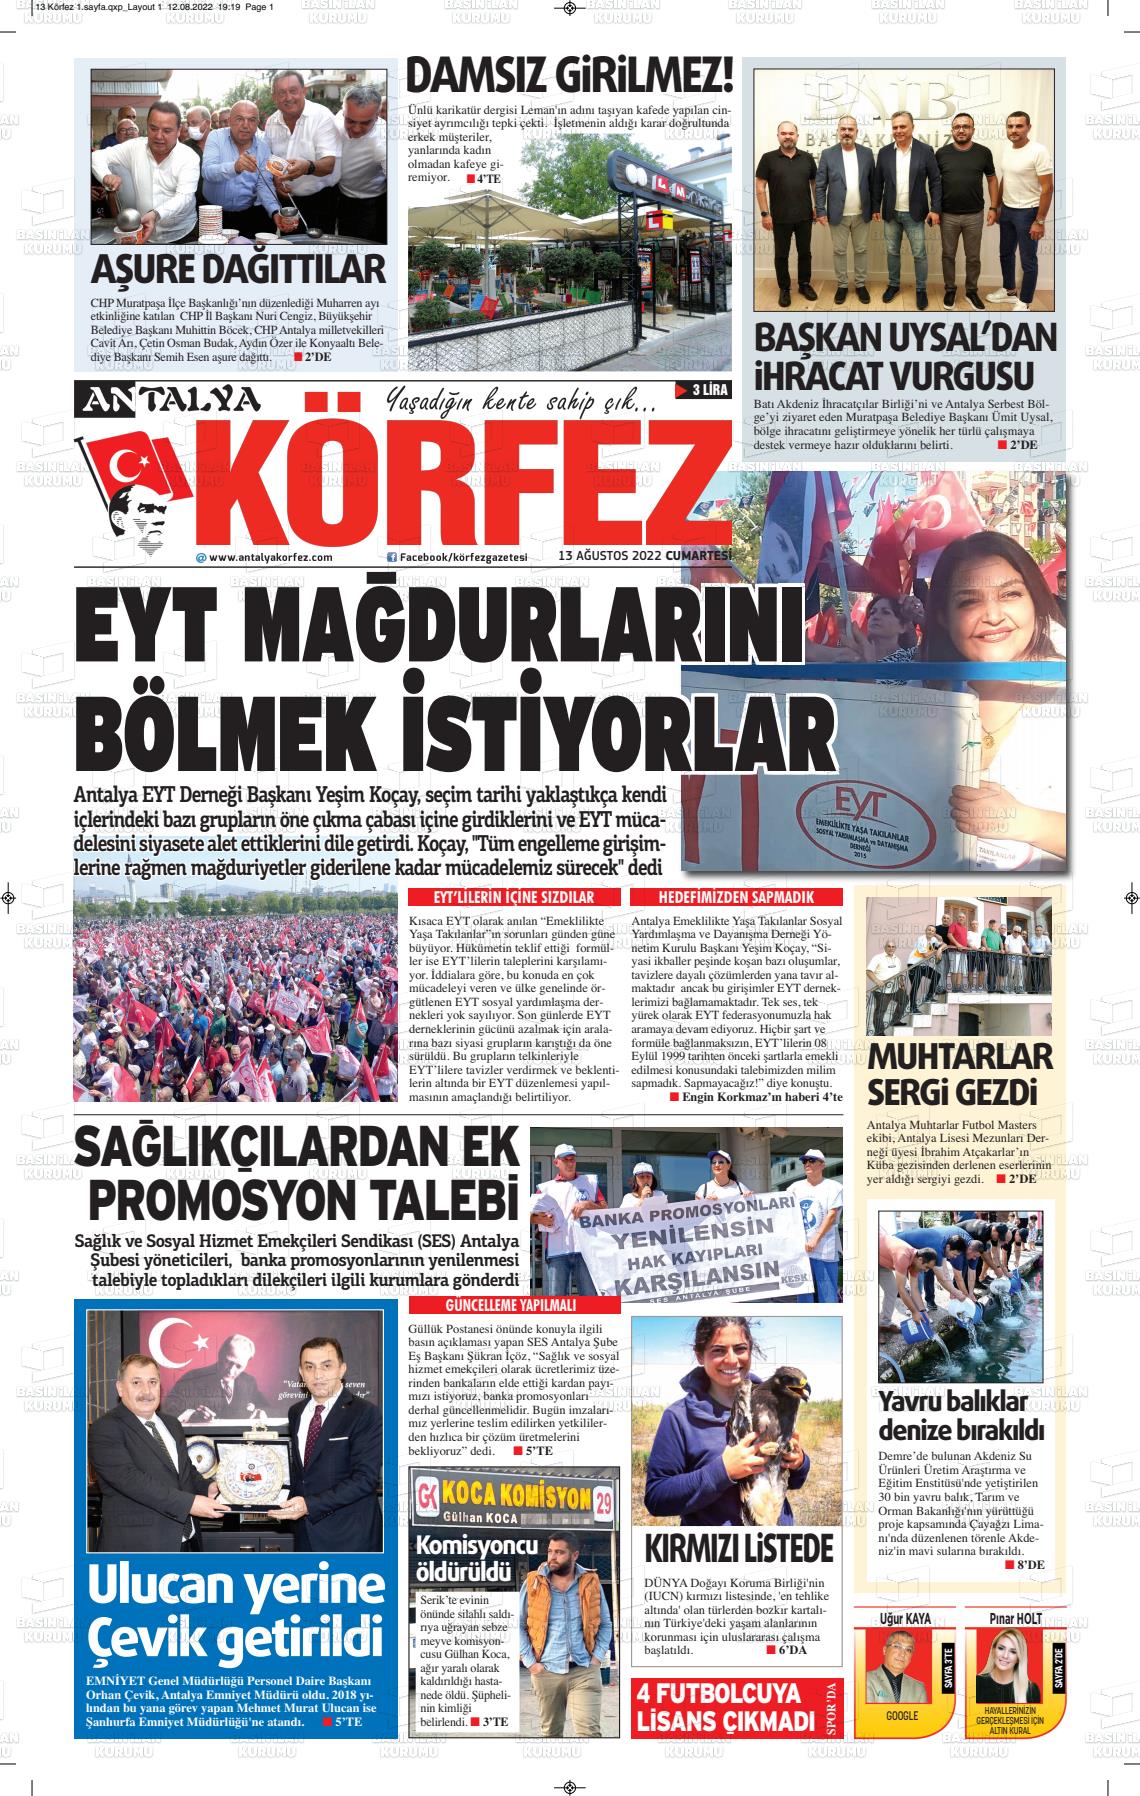 13 Ağustos 2022 Antalya Körfez Gazete Manşeti